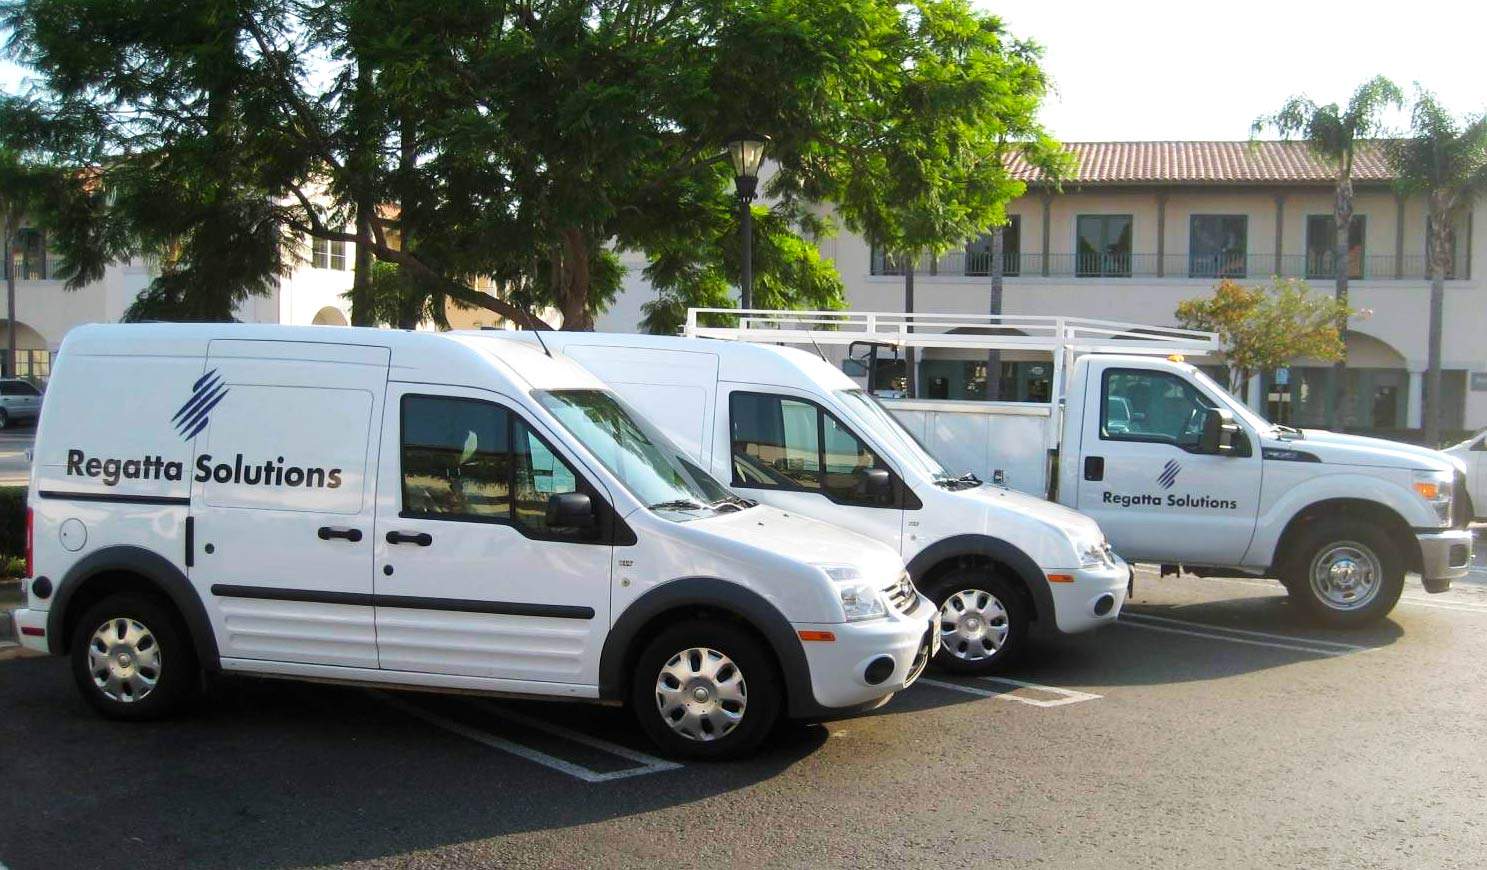 Three Regatta support vehicles in a parking lot.